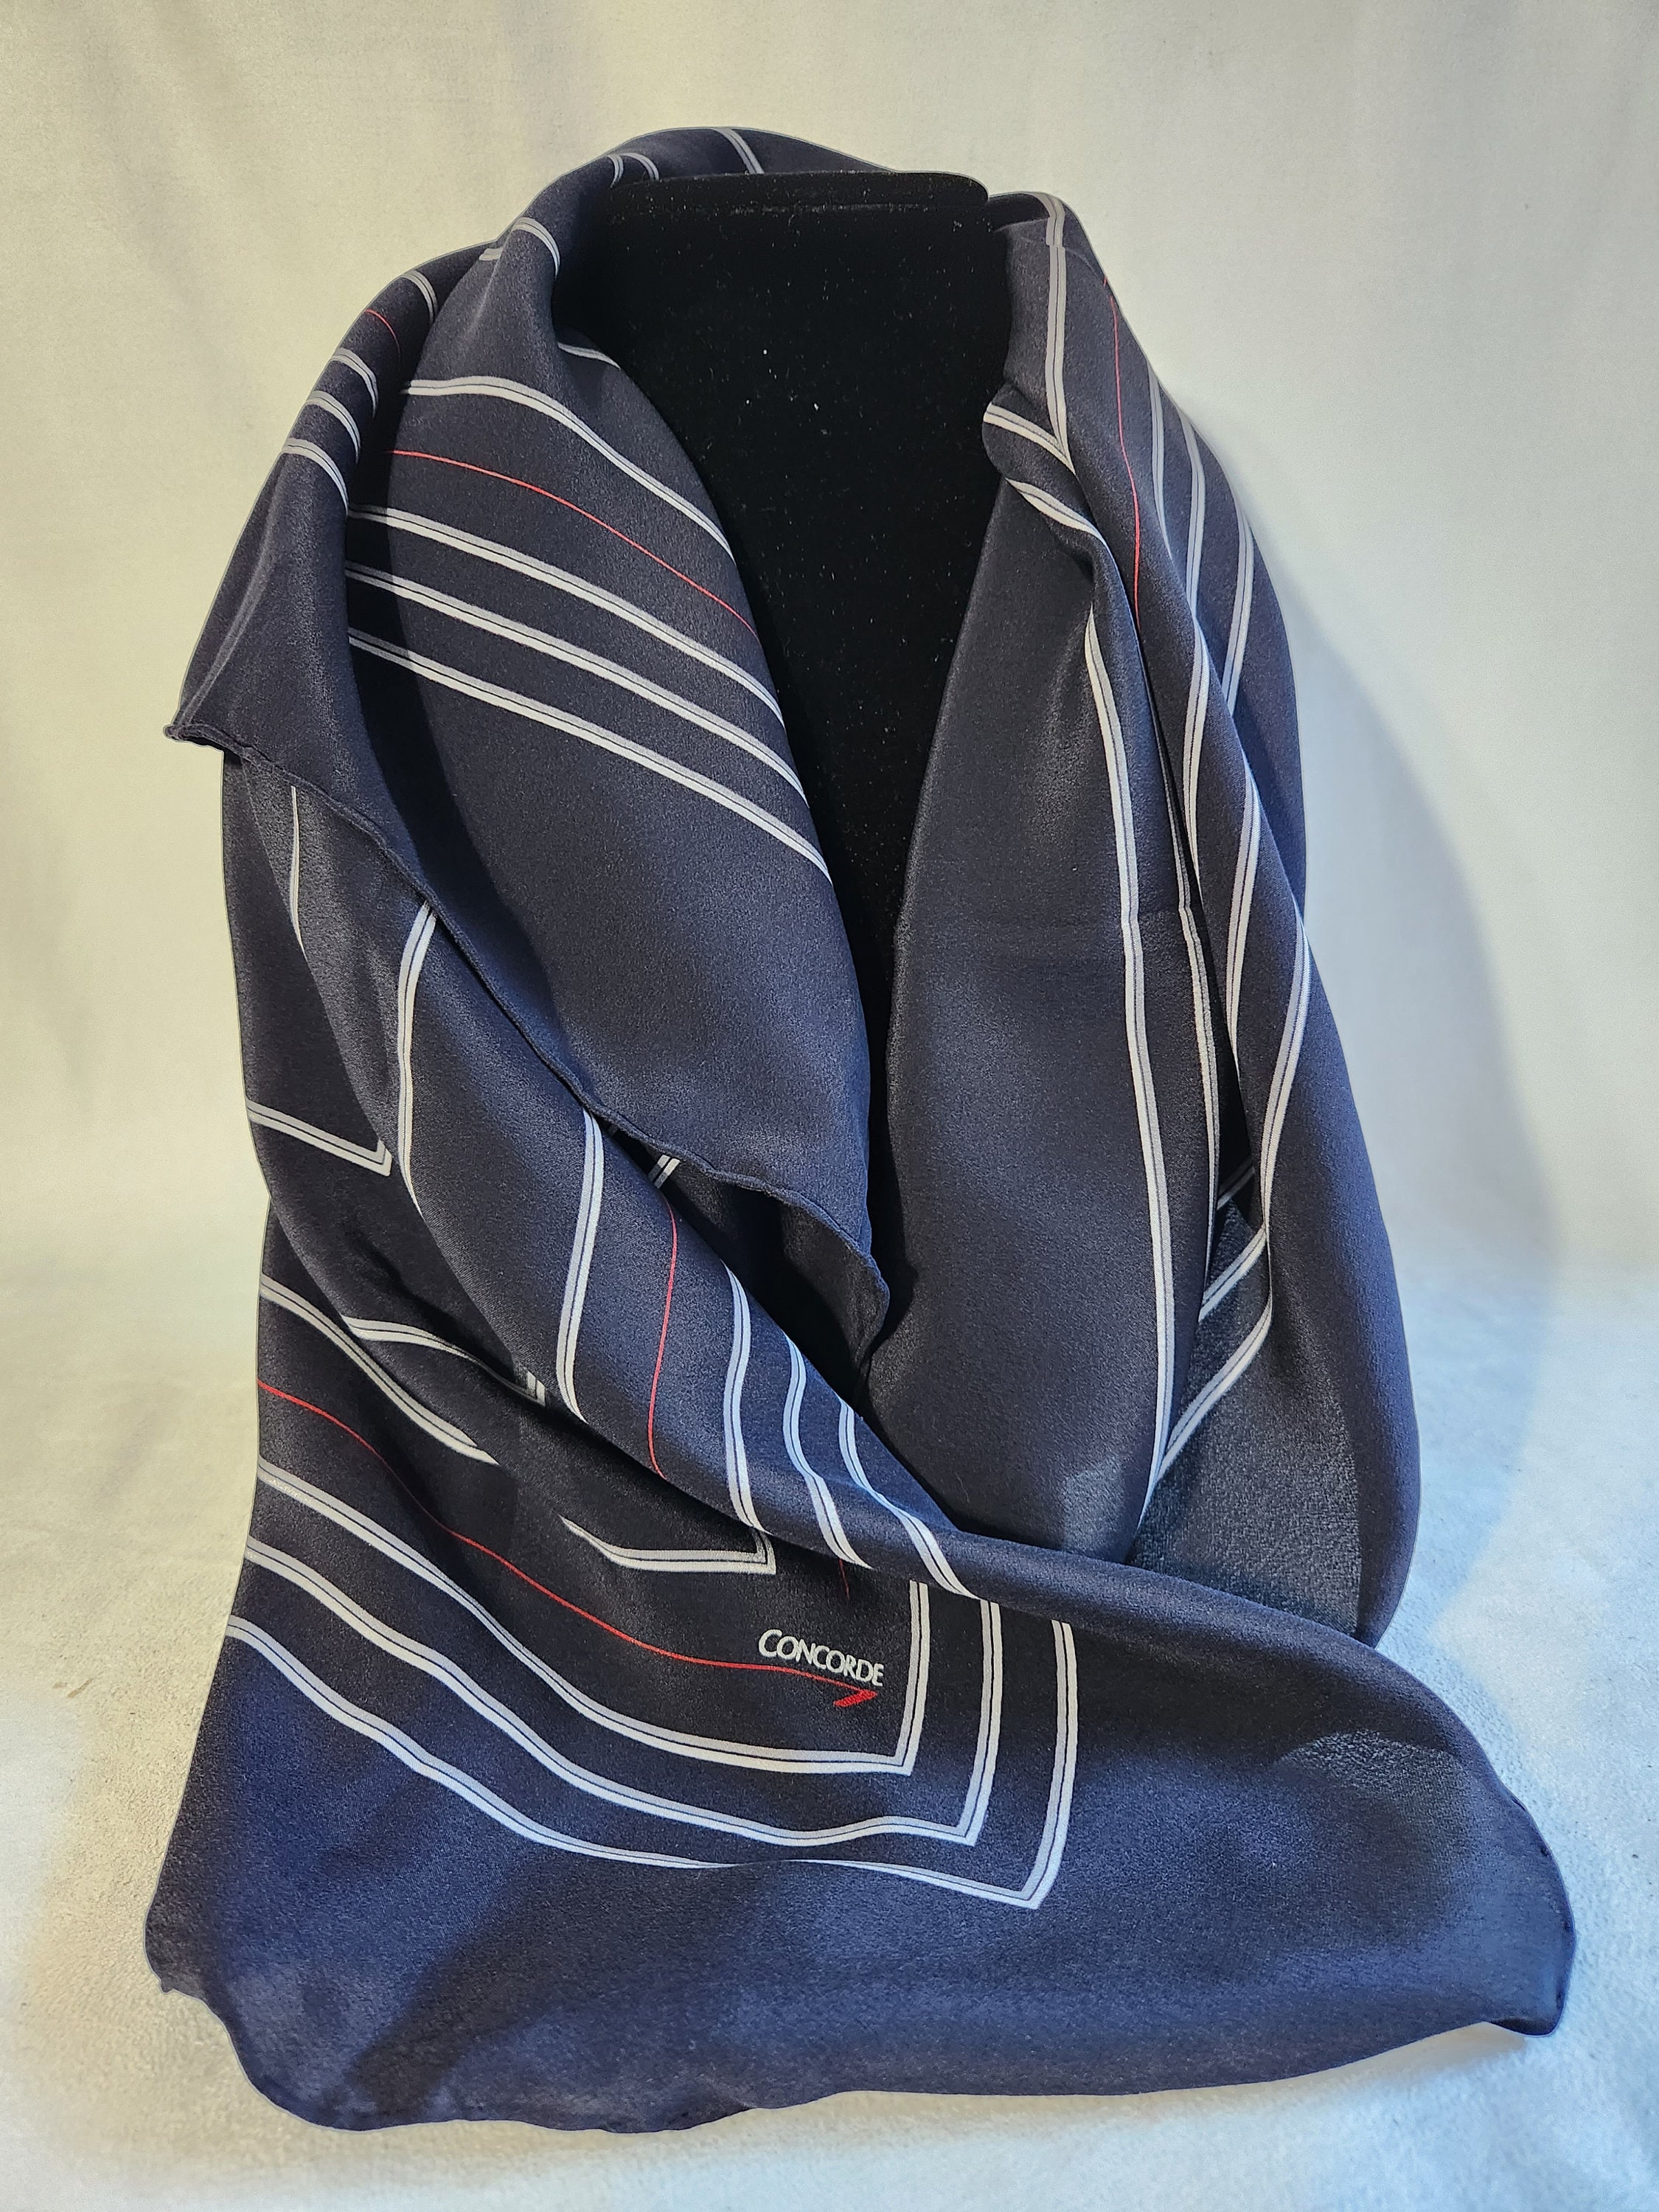 Drawn stripe cotton silk scarf dark navy – Totême